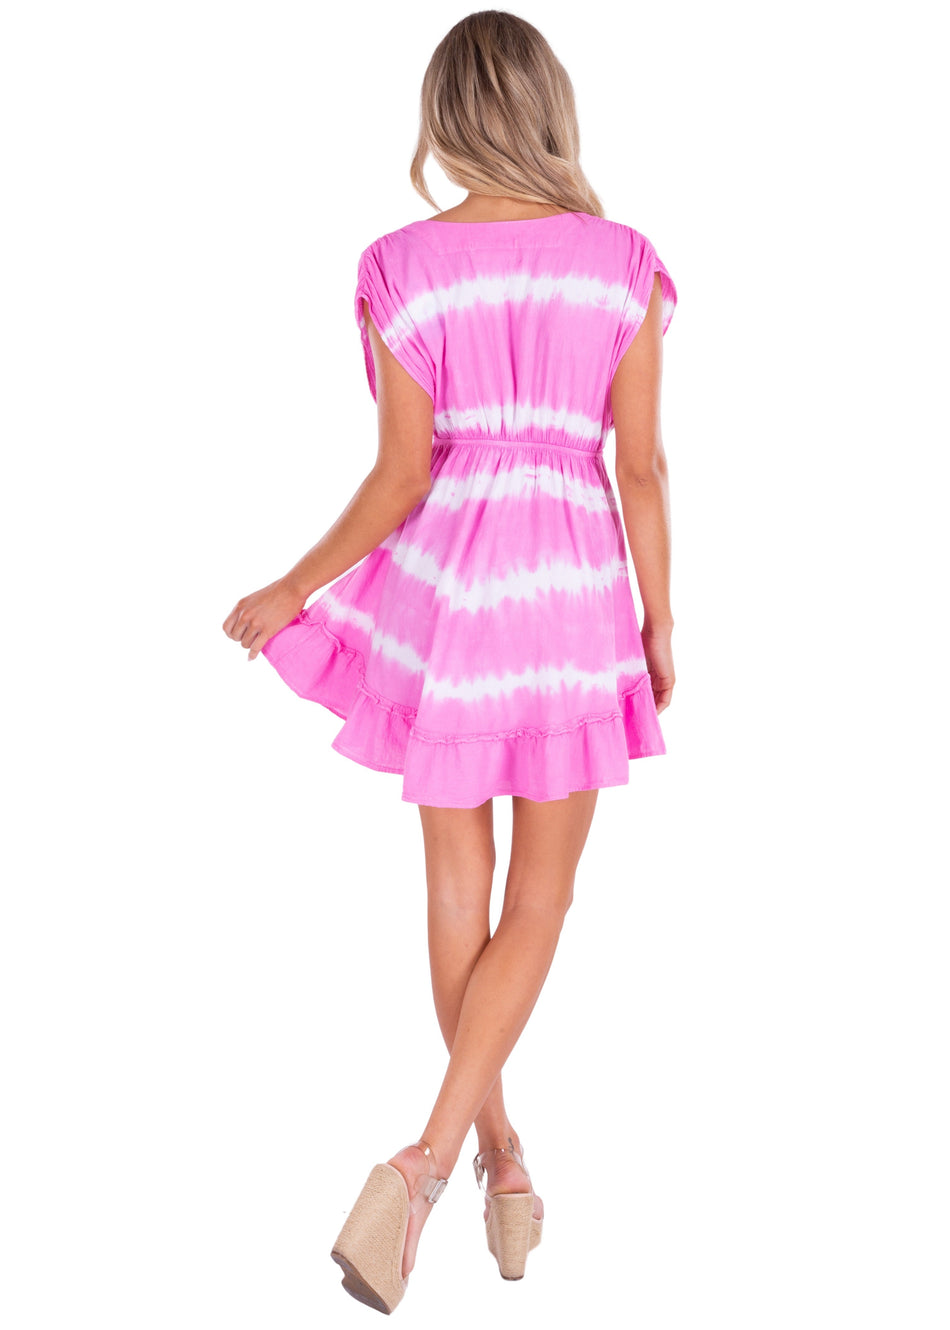 NW1373 - Pink Wash Cotton Dress